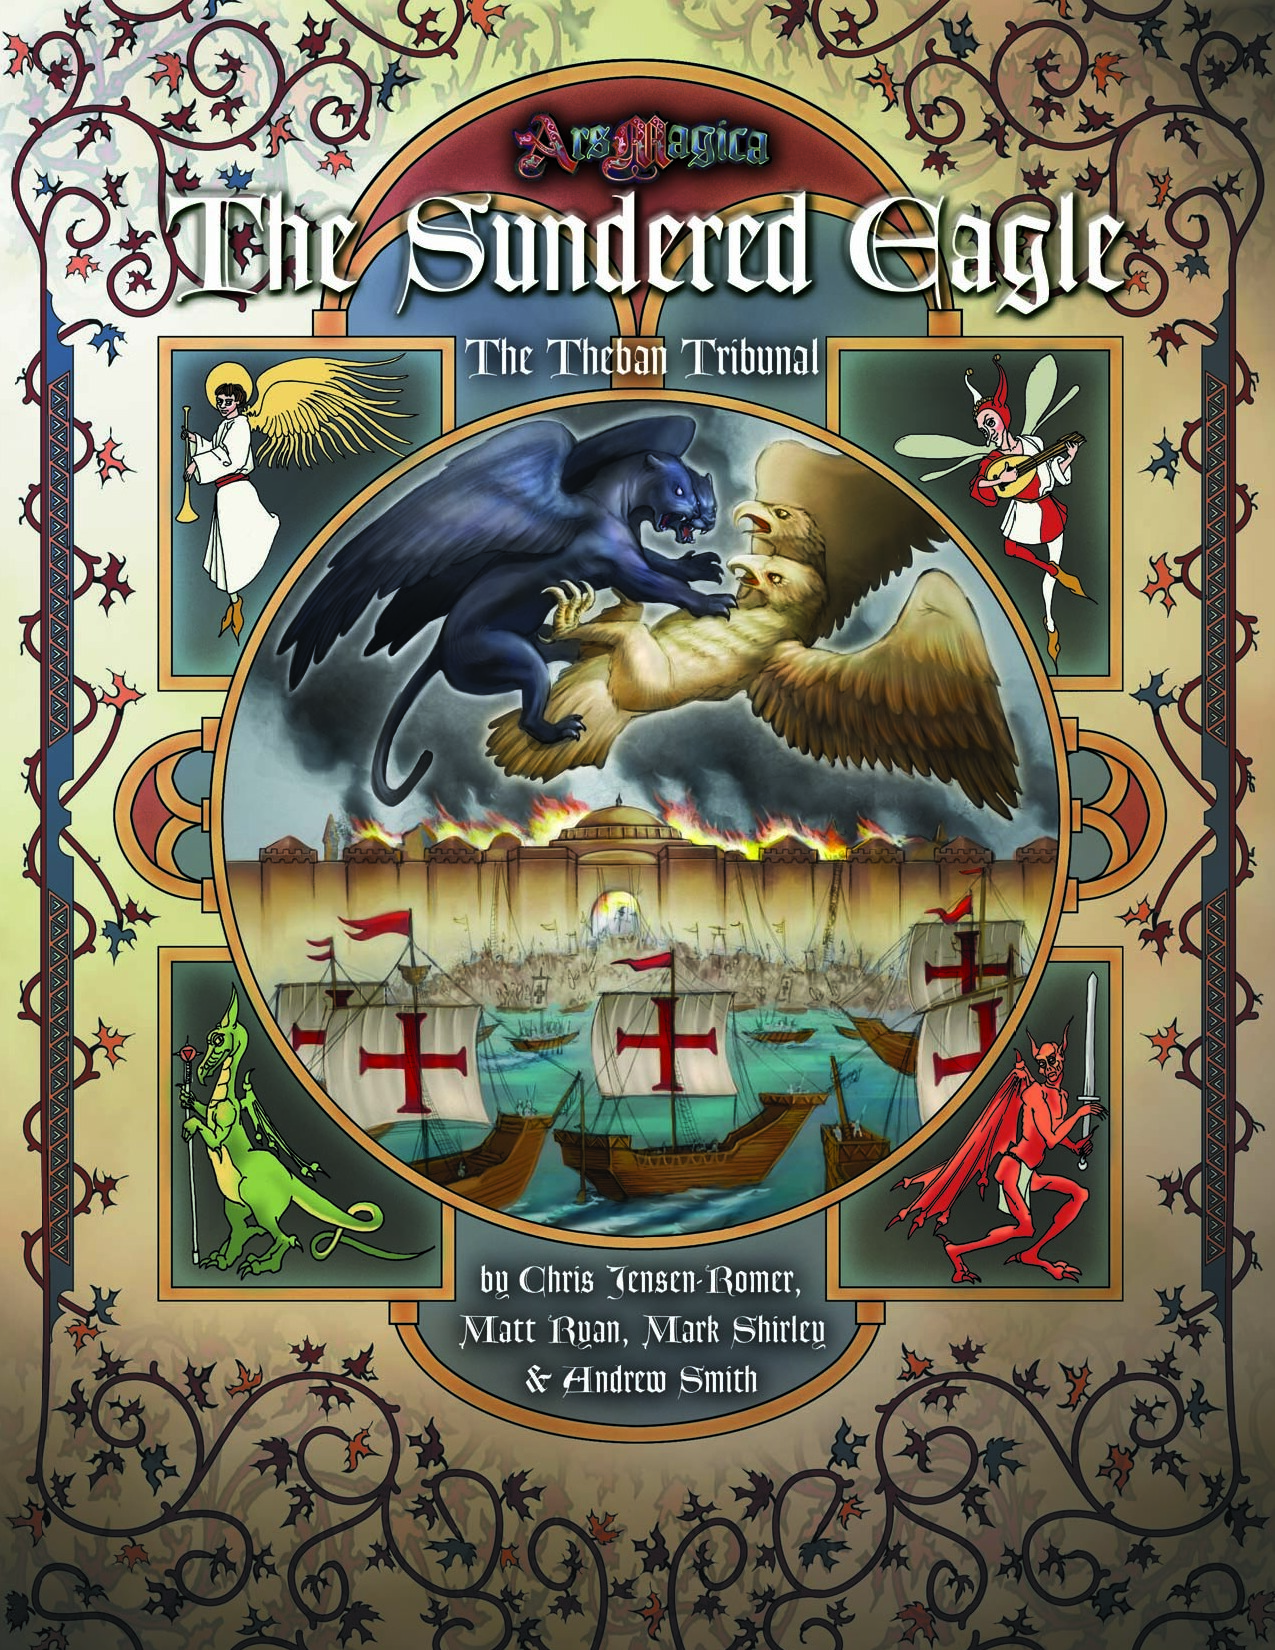 Ars Magica - 5th - The Sundered Eagle - The Theban Tribunal AG0295